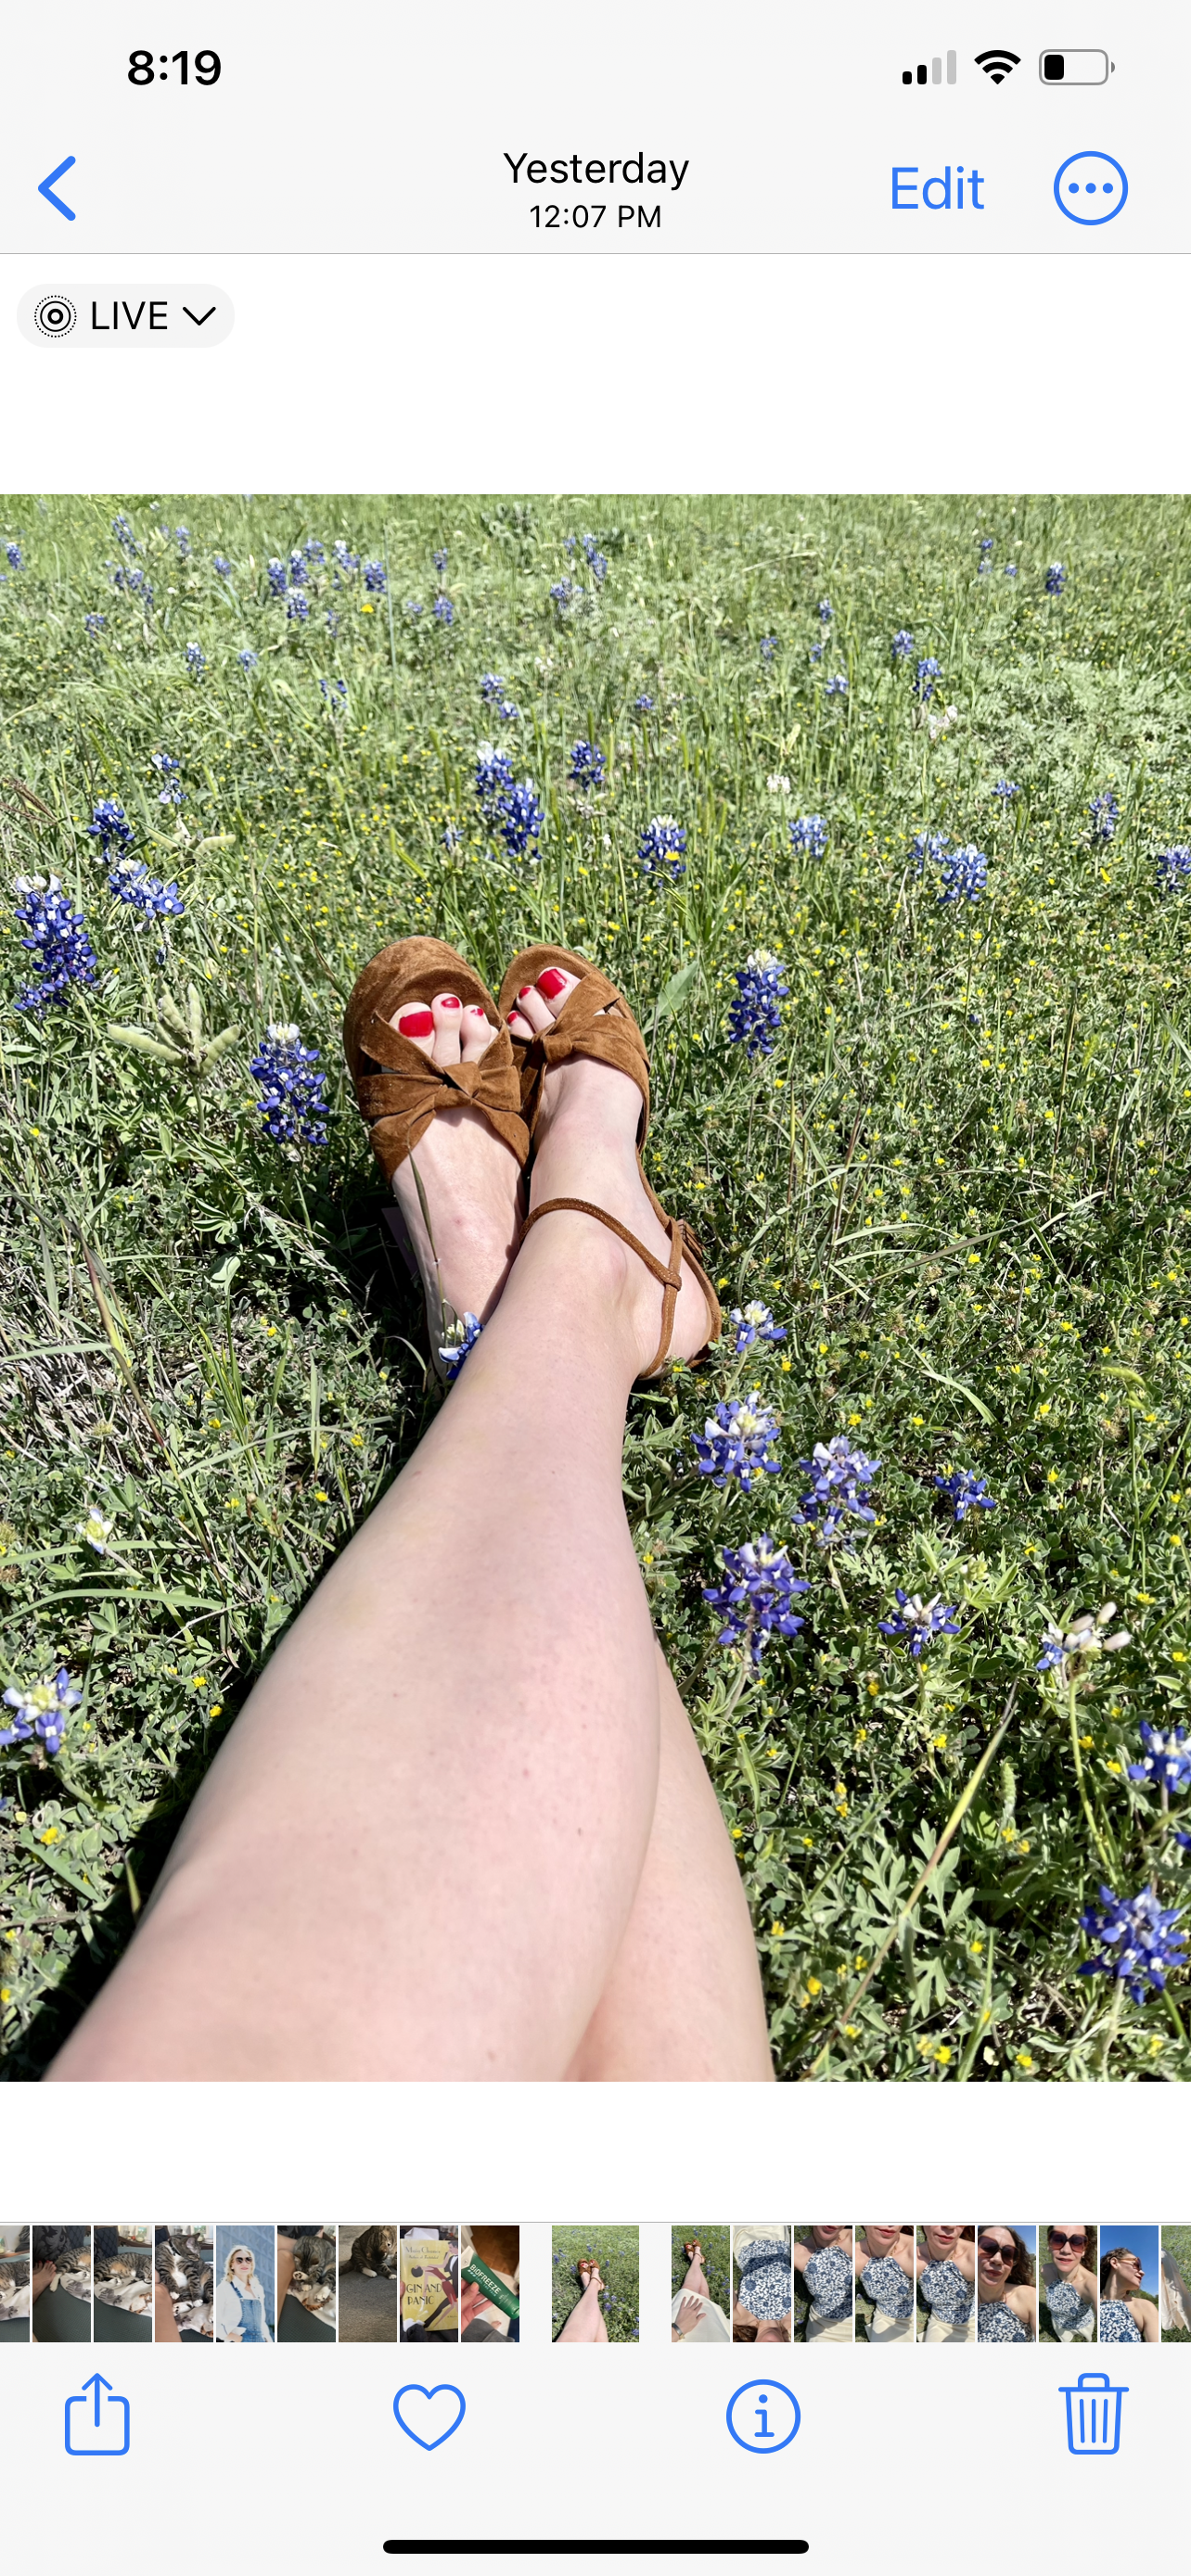 a women's foto int brow suede platforms in a field of wildflowersq